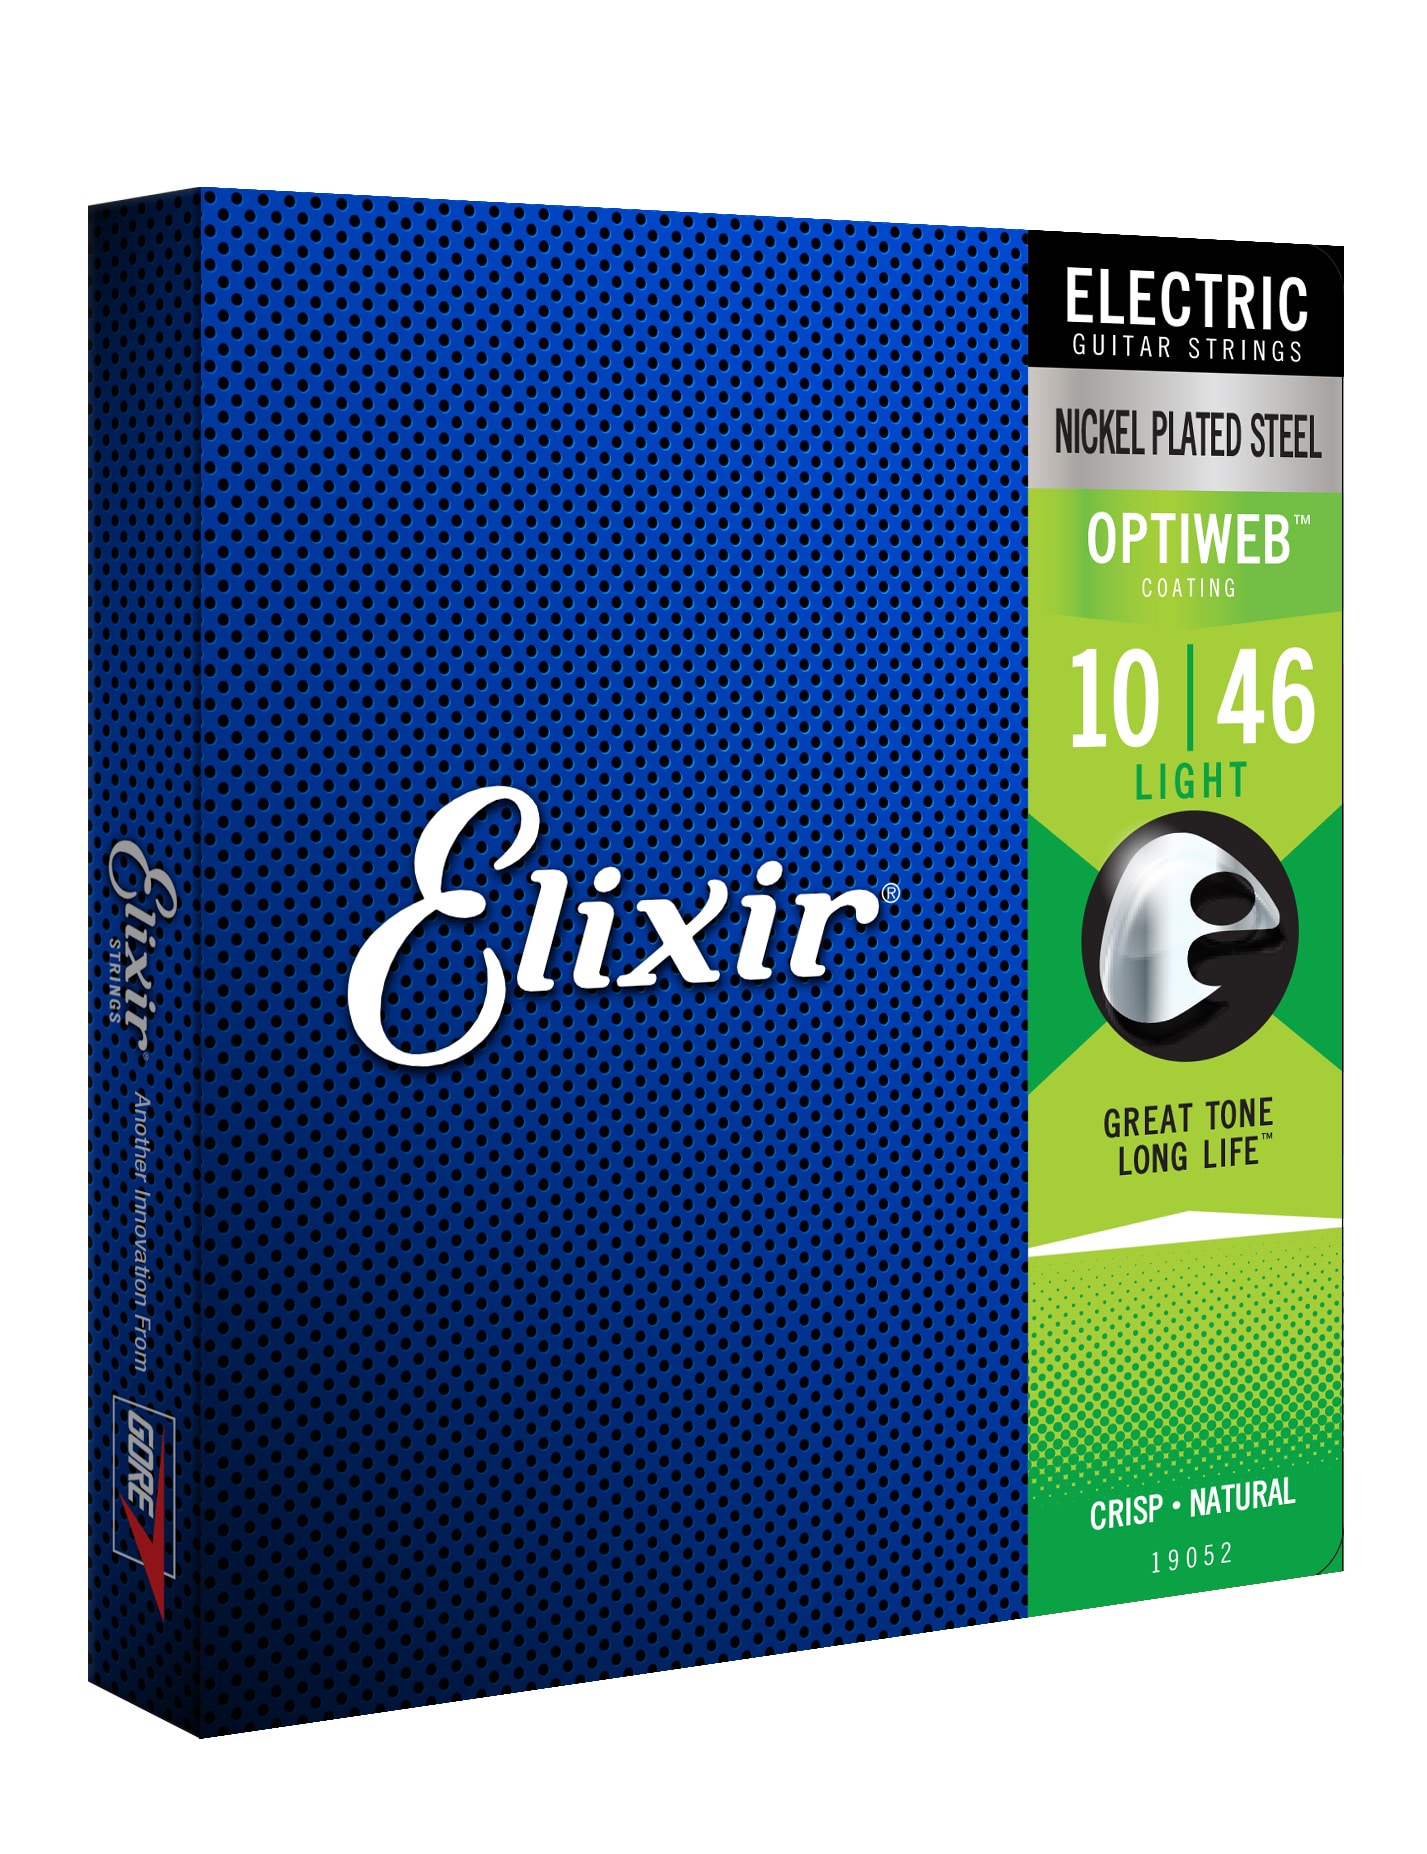 Equipment Review: Elixir OPTIWEB Electric Guitar Strings